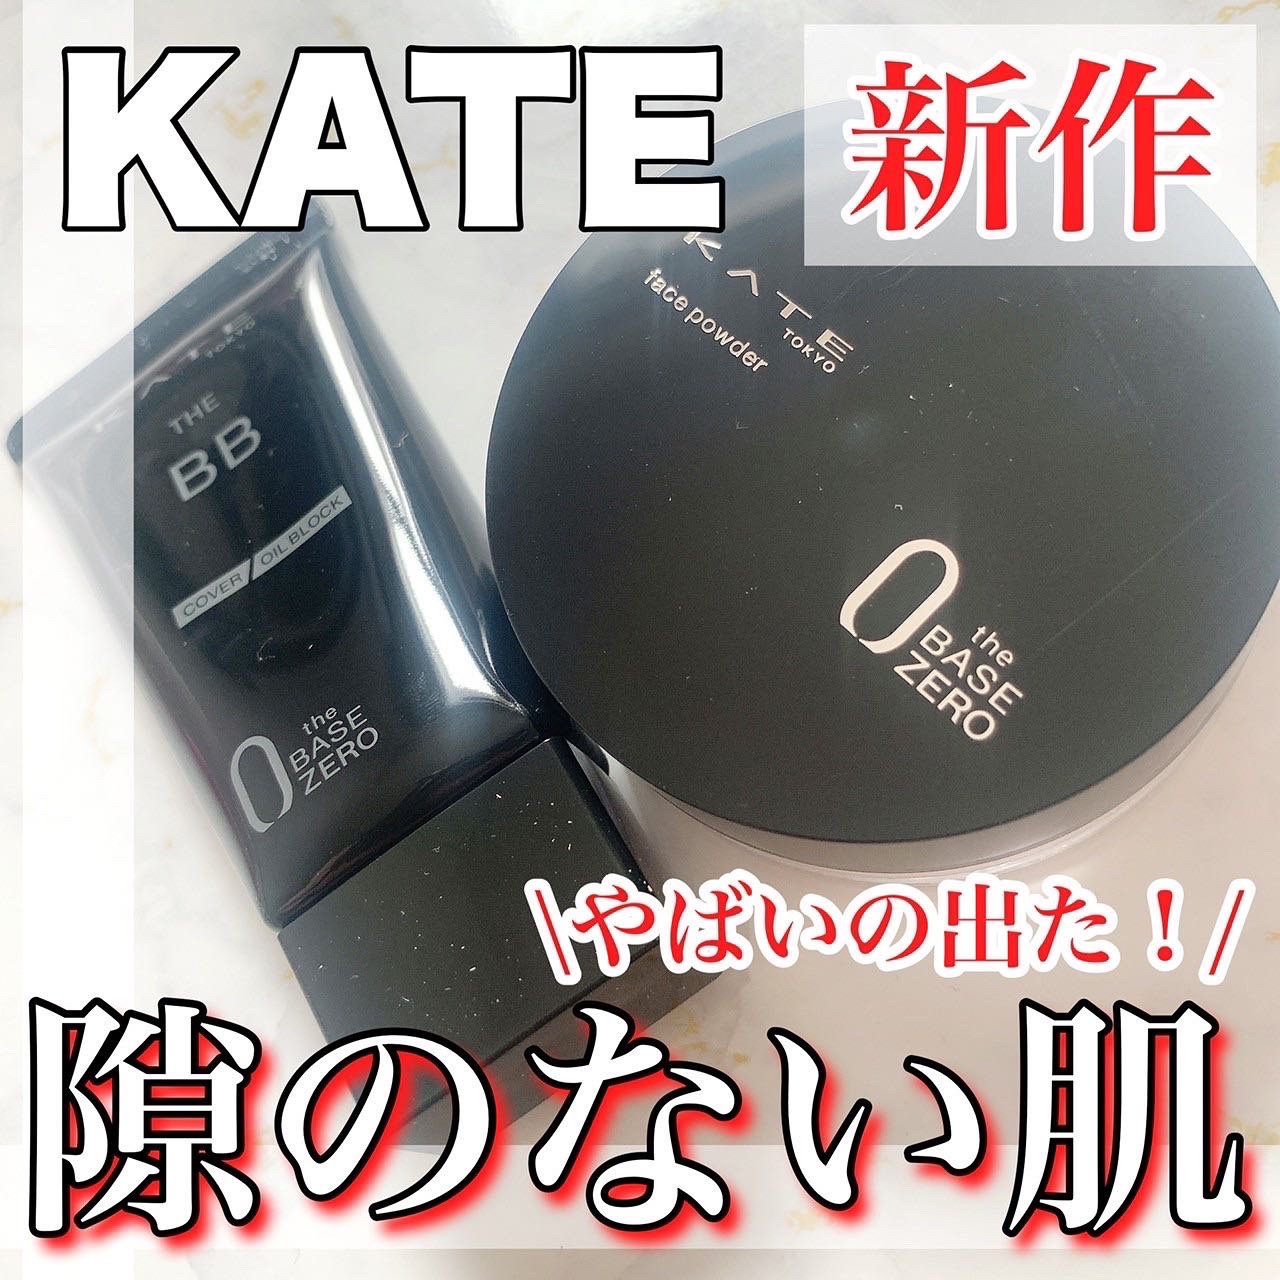 KATE(ケイト) ザBB (カバー&オイルブロック)の良い点・メリットに関するまみやこさんの口コミ画像2